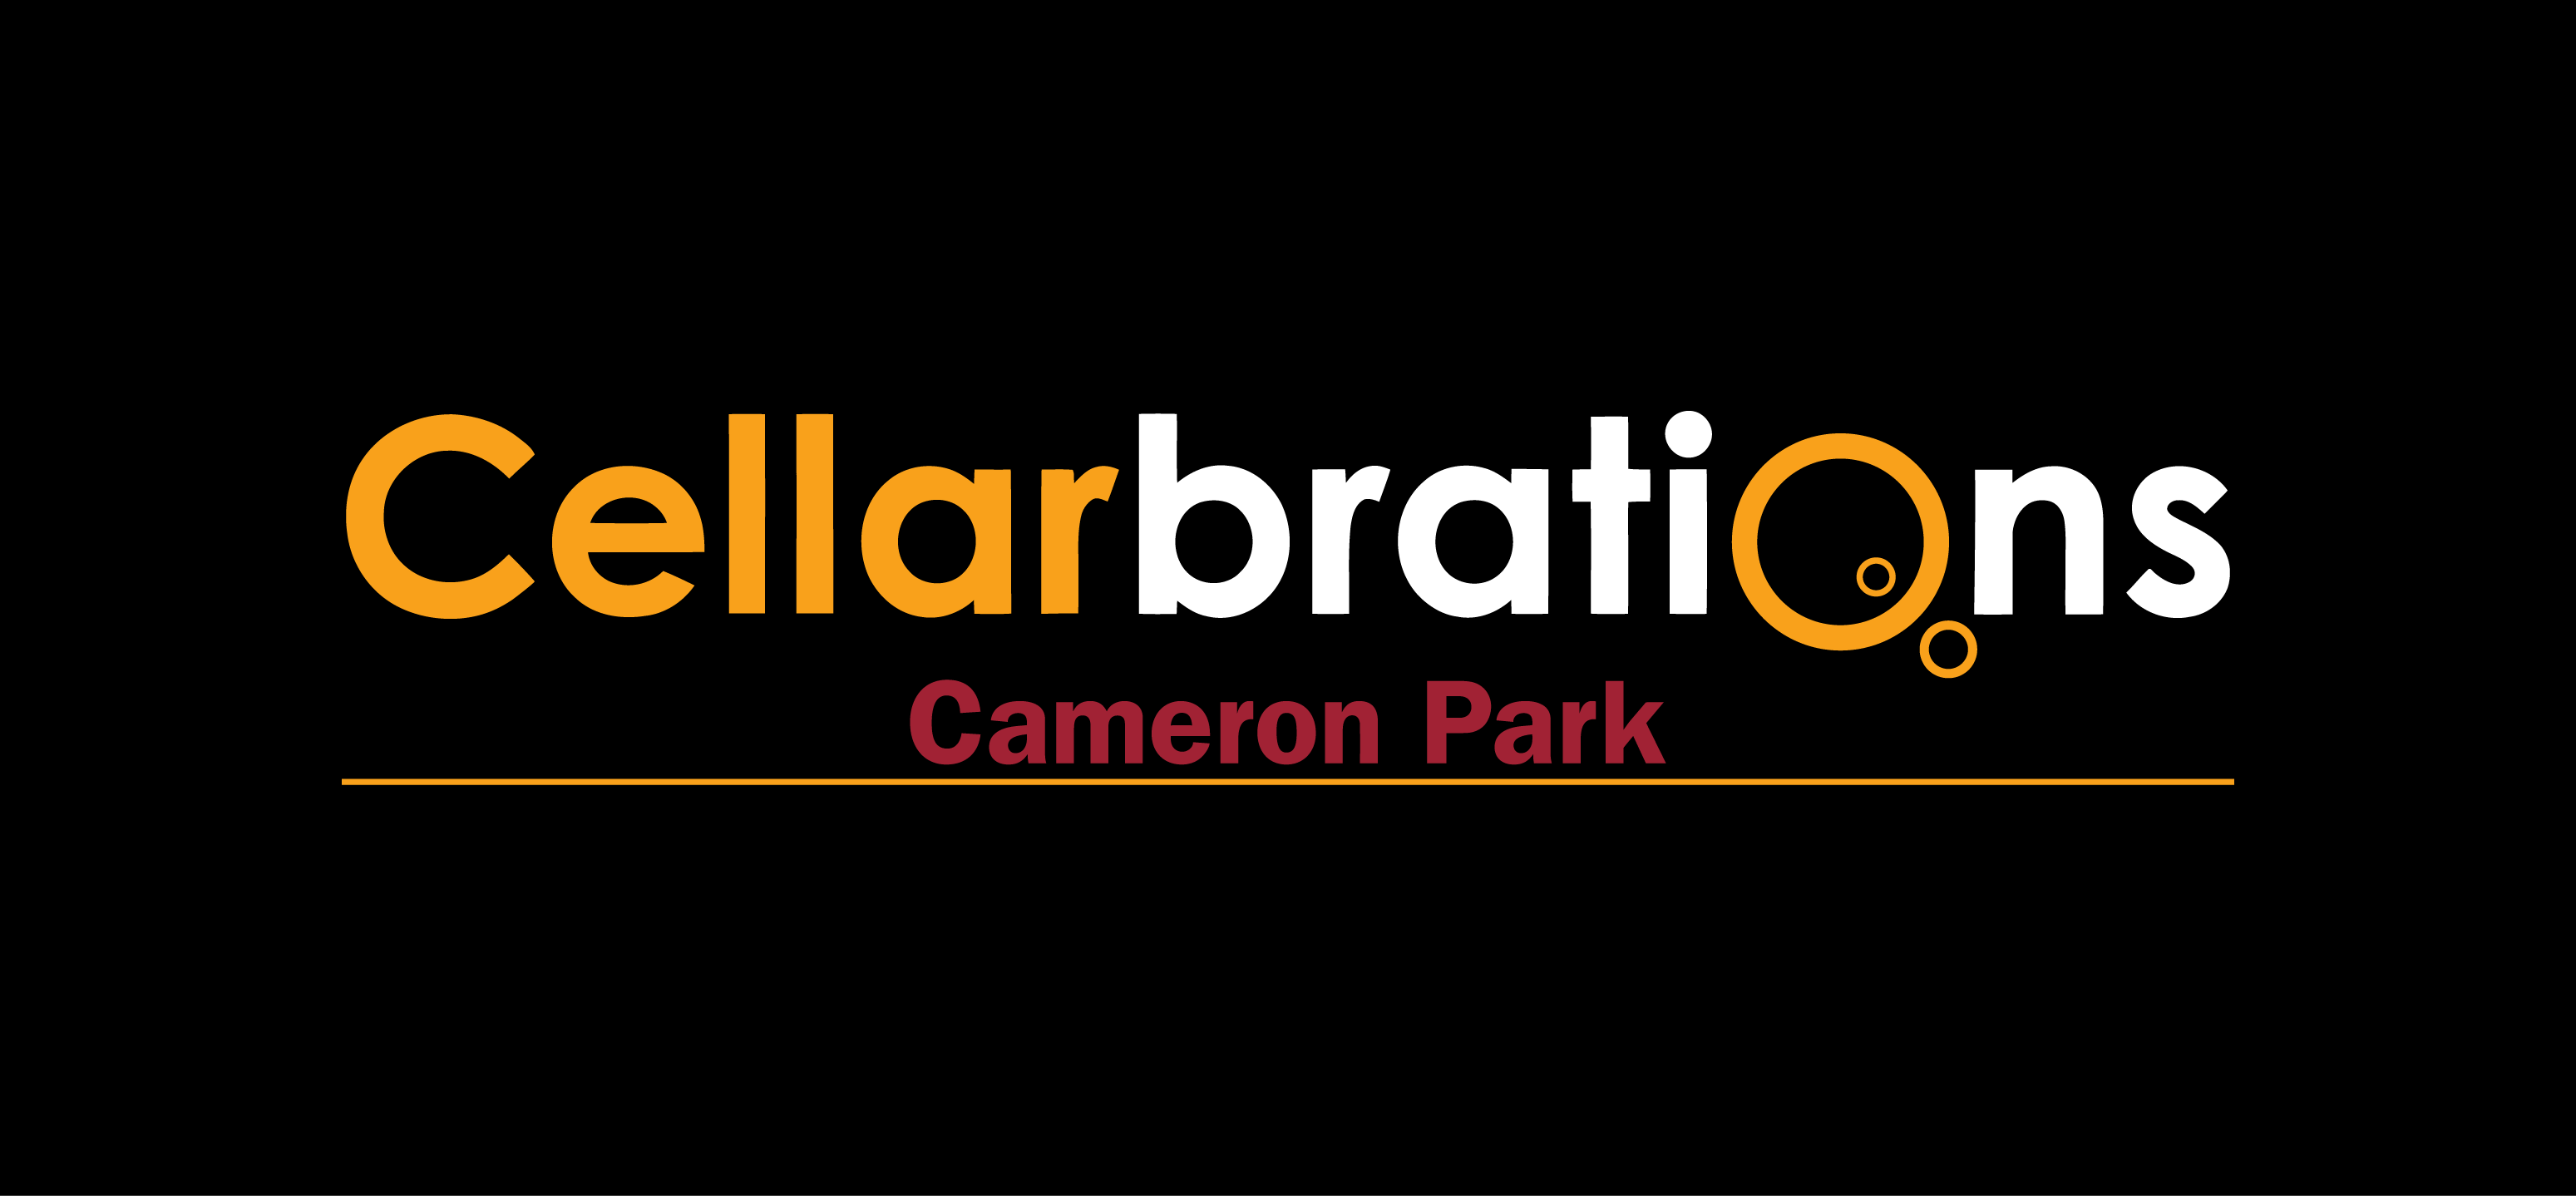 Cellarbrations Cameron Park